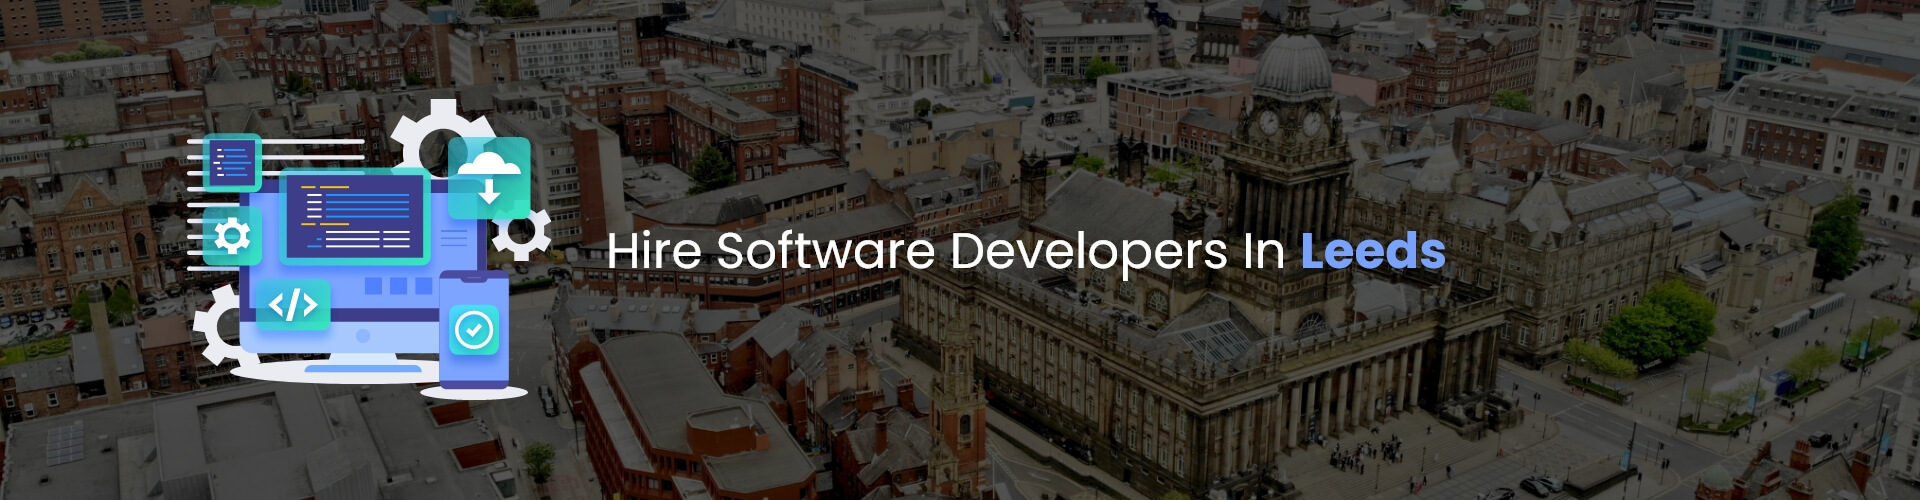 hire software developers in leeds